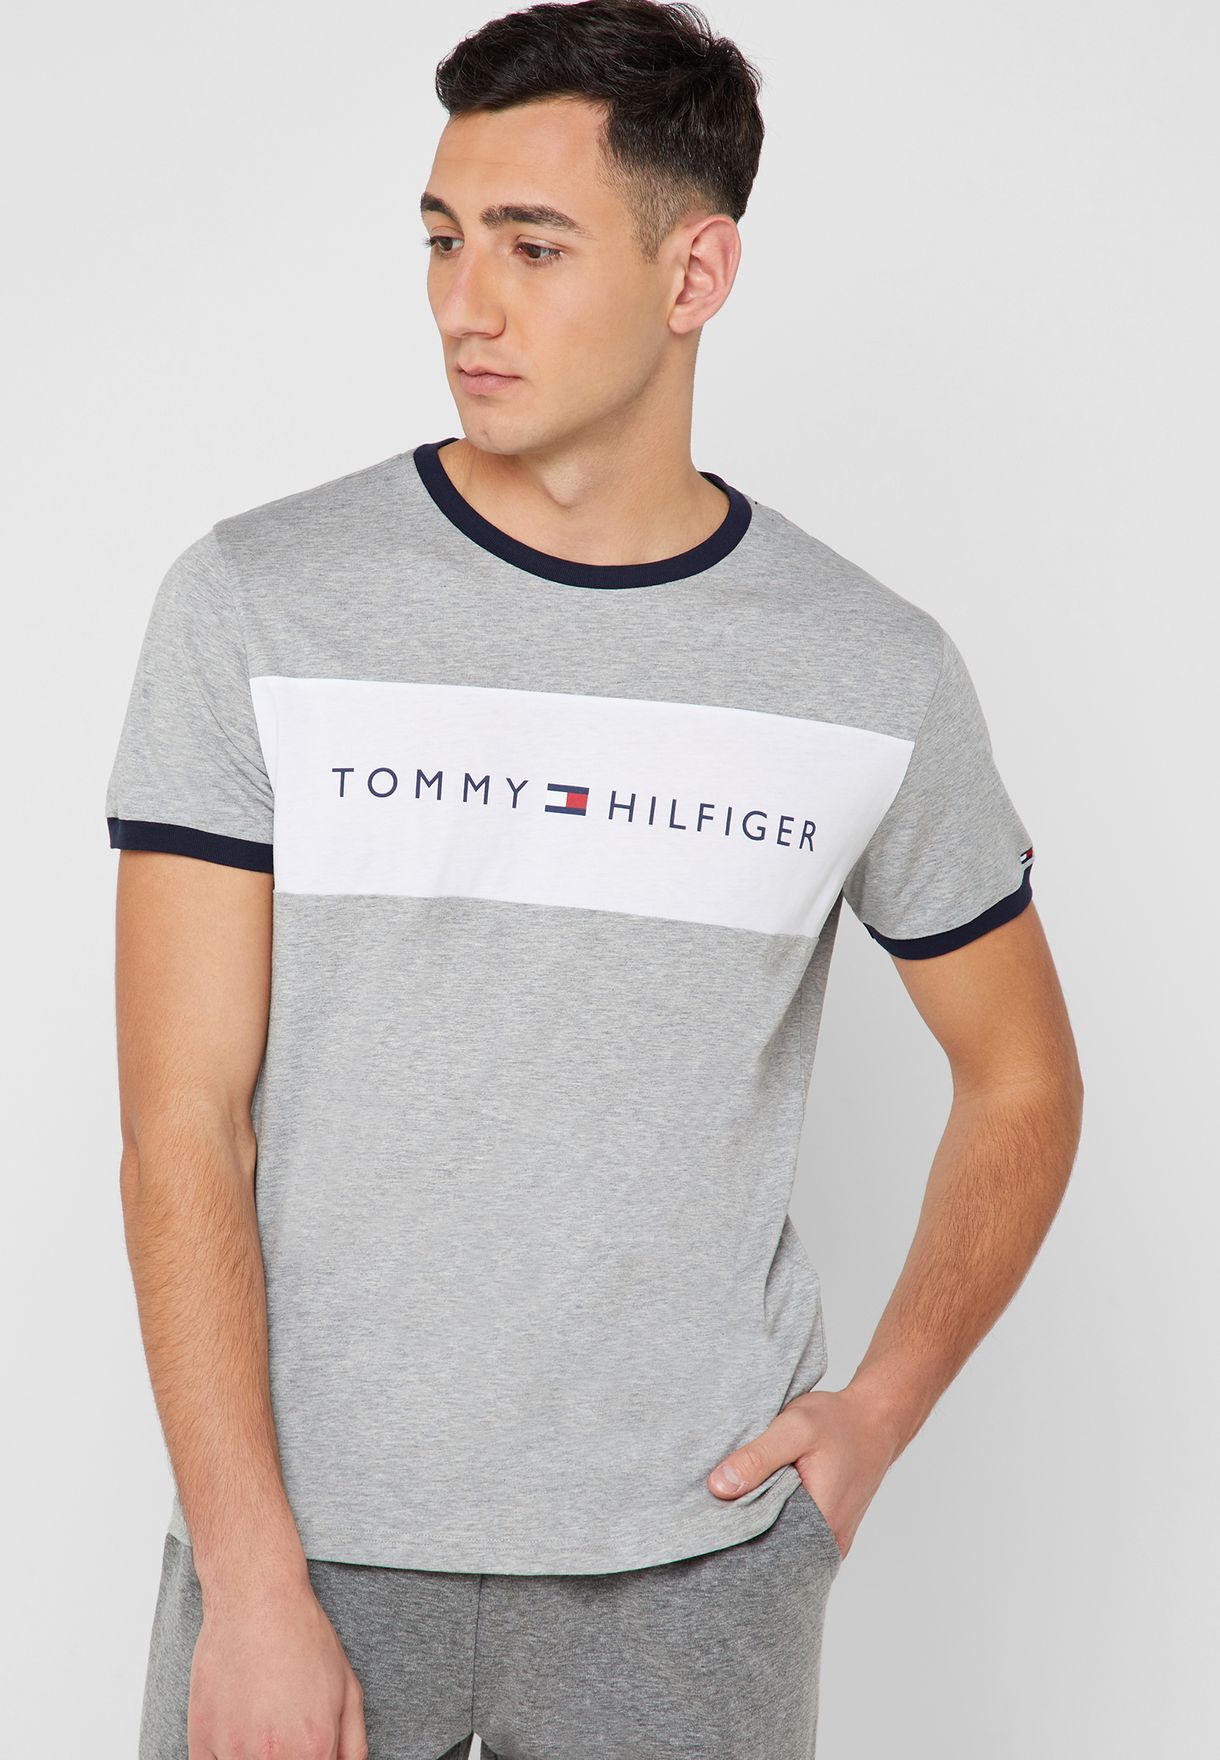 tommy hilfiger t shirt mens cheap